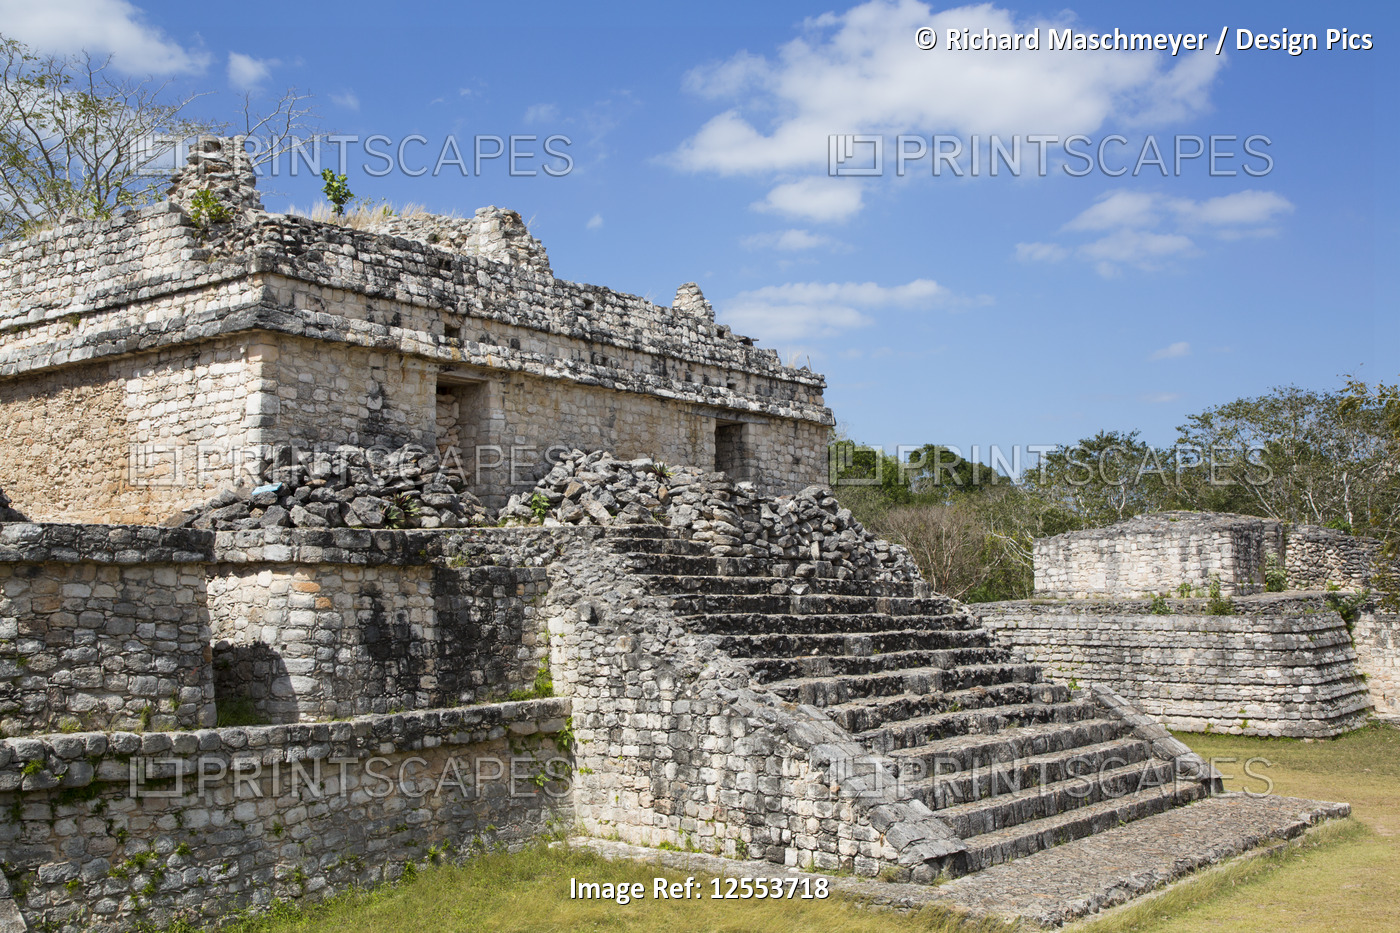 Structure 17, Ek Balam, Yucatec-Mayan Archaeological Site; Yucatan, Mexico